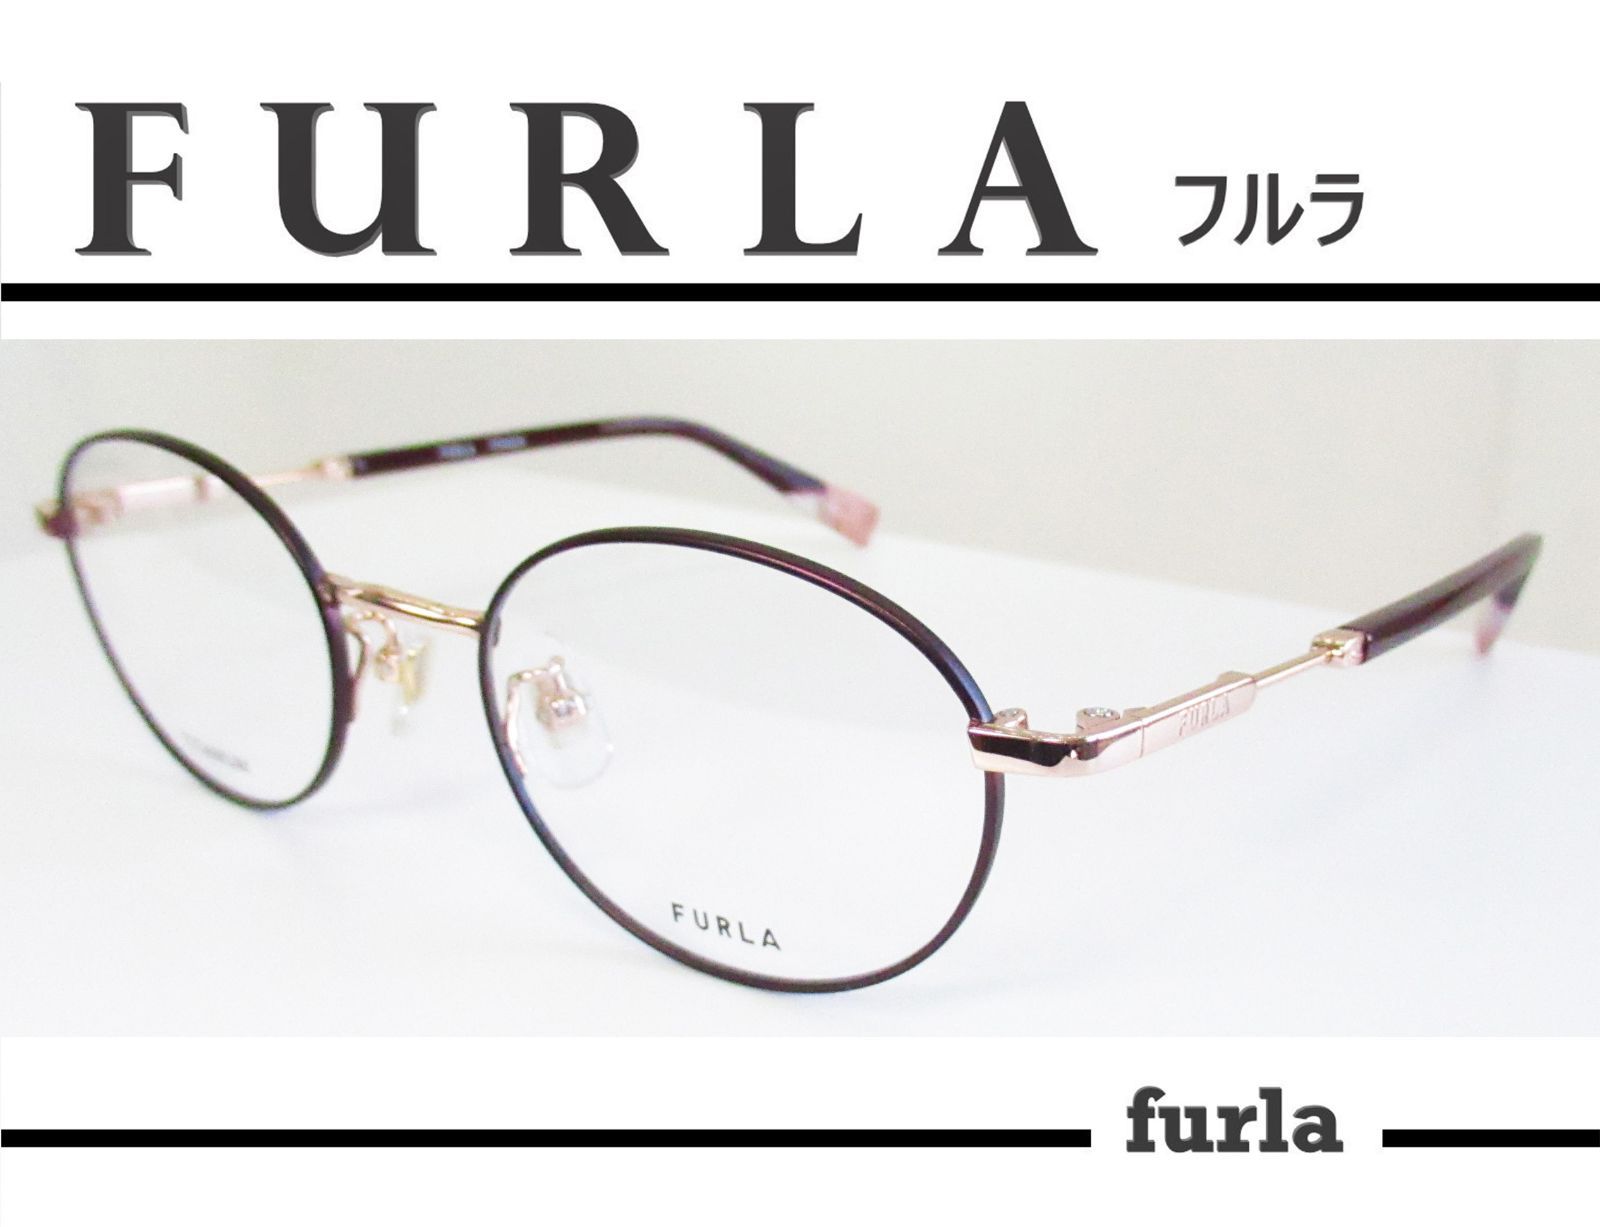 FURLA フルラ ◇メガネフレーム VFU-657J-0307 (マットボルドー/ピンク 